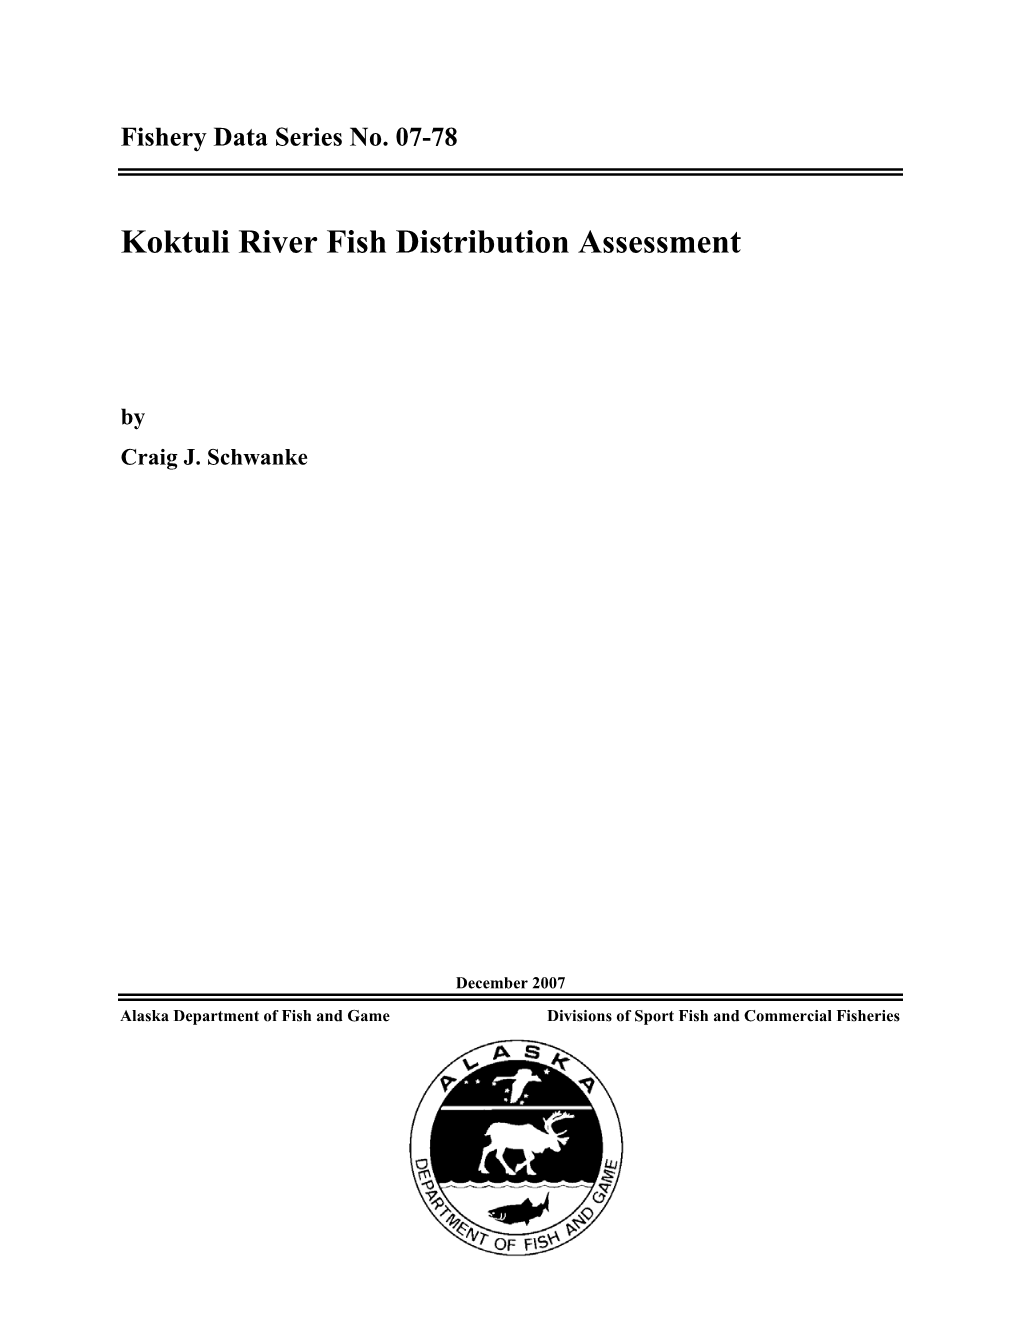 Koktuli River Fish Distribution Assessment